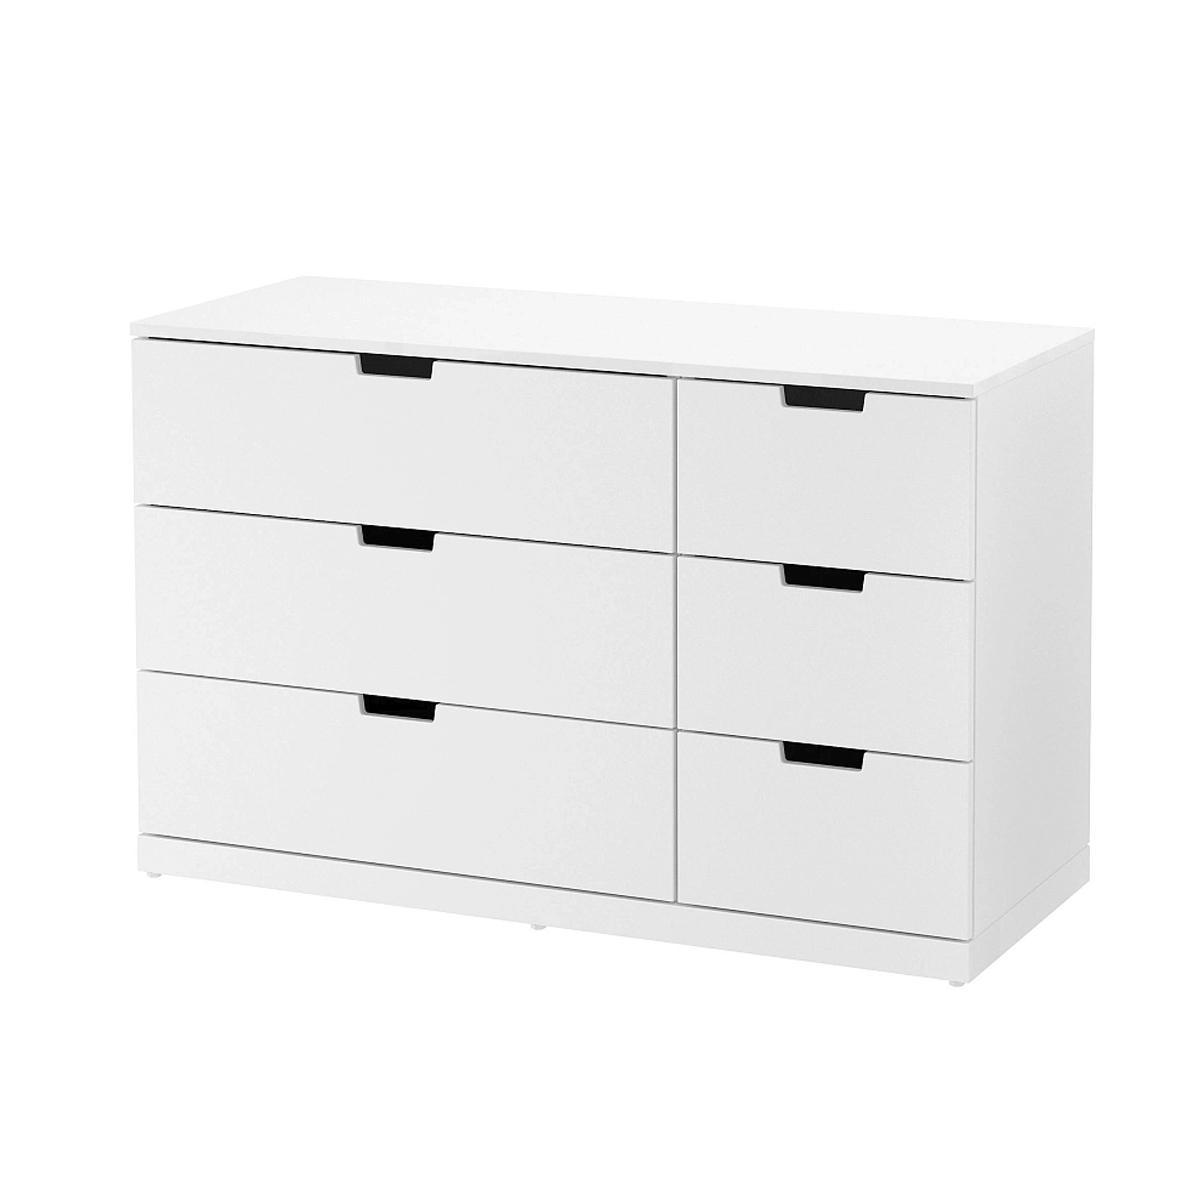 Изображение товара Комод Нордли 17 white ИКЕА (IKEA), 90x45x70 см на сайте adeta.ru